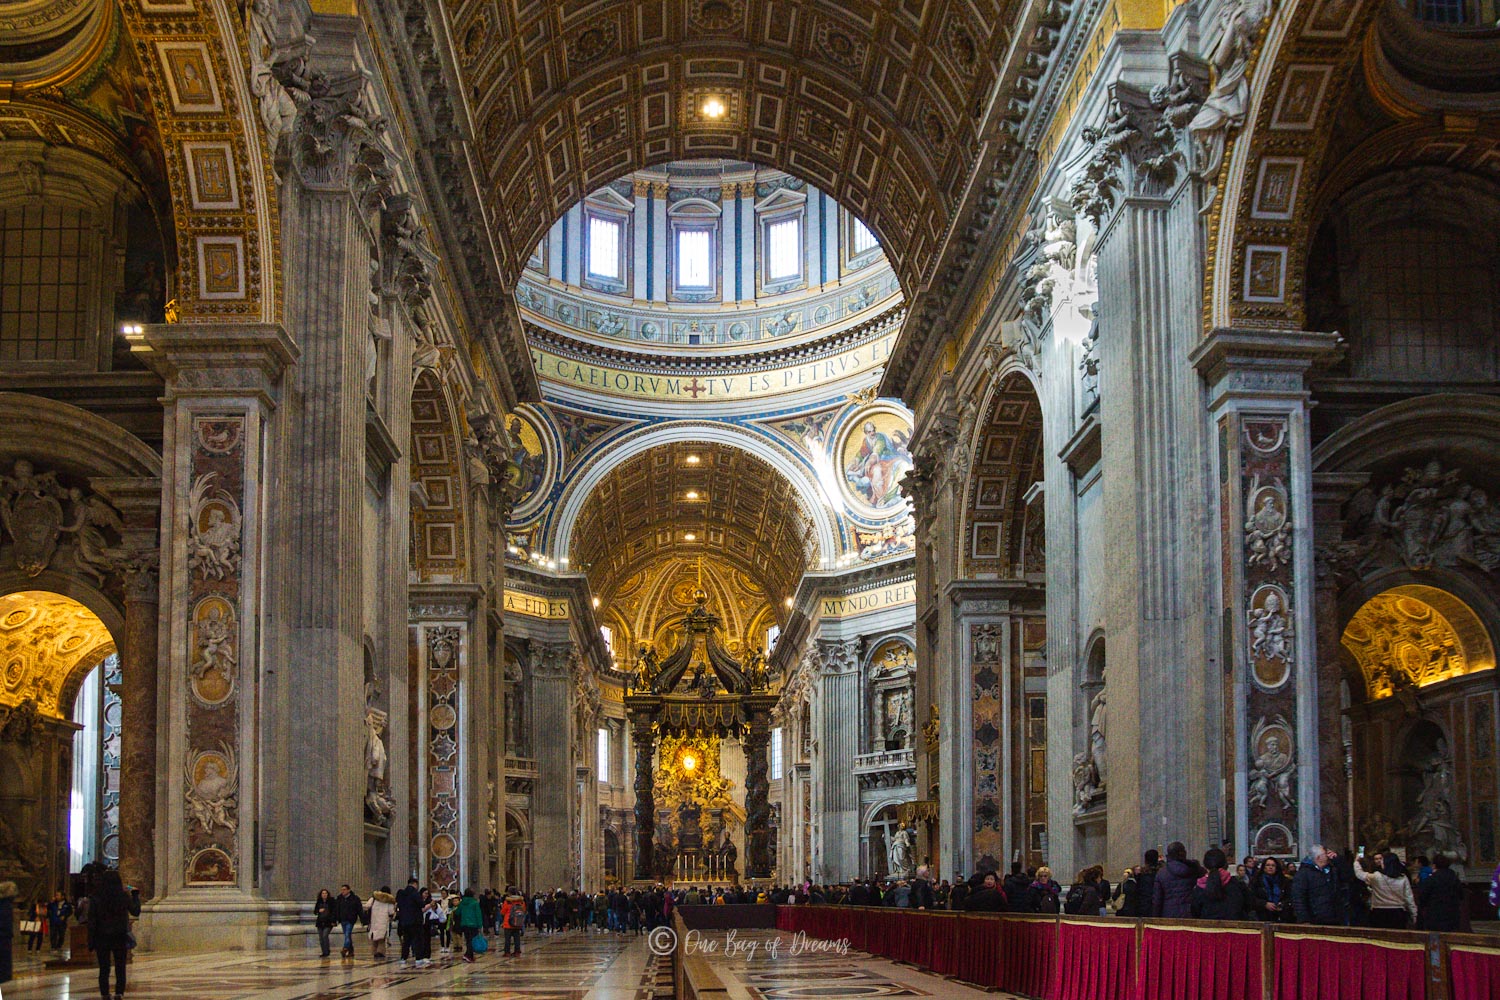 Inside of St. Peter